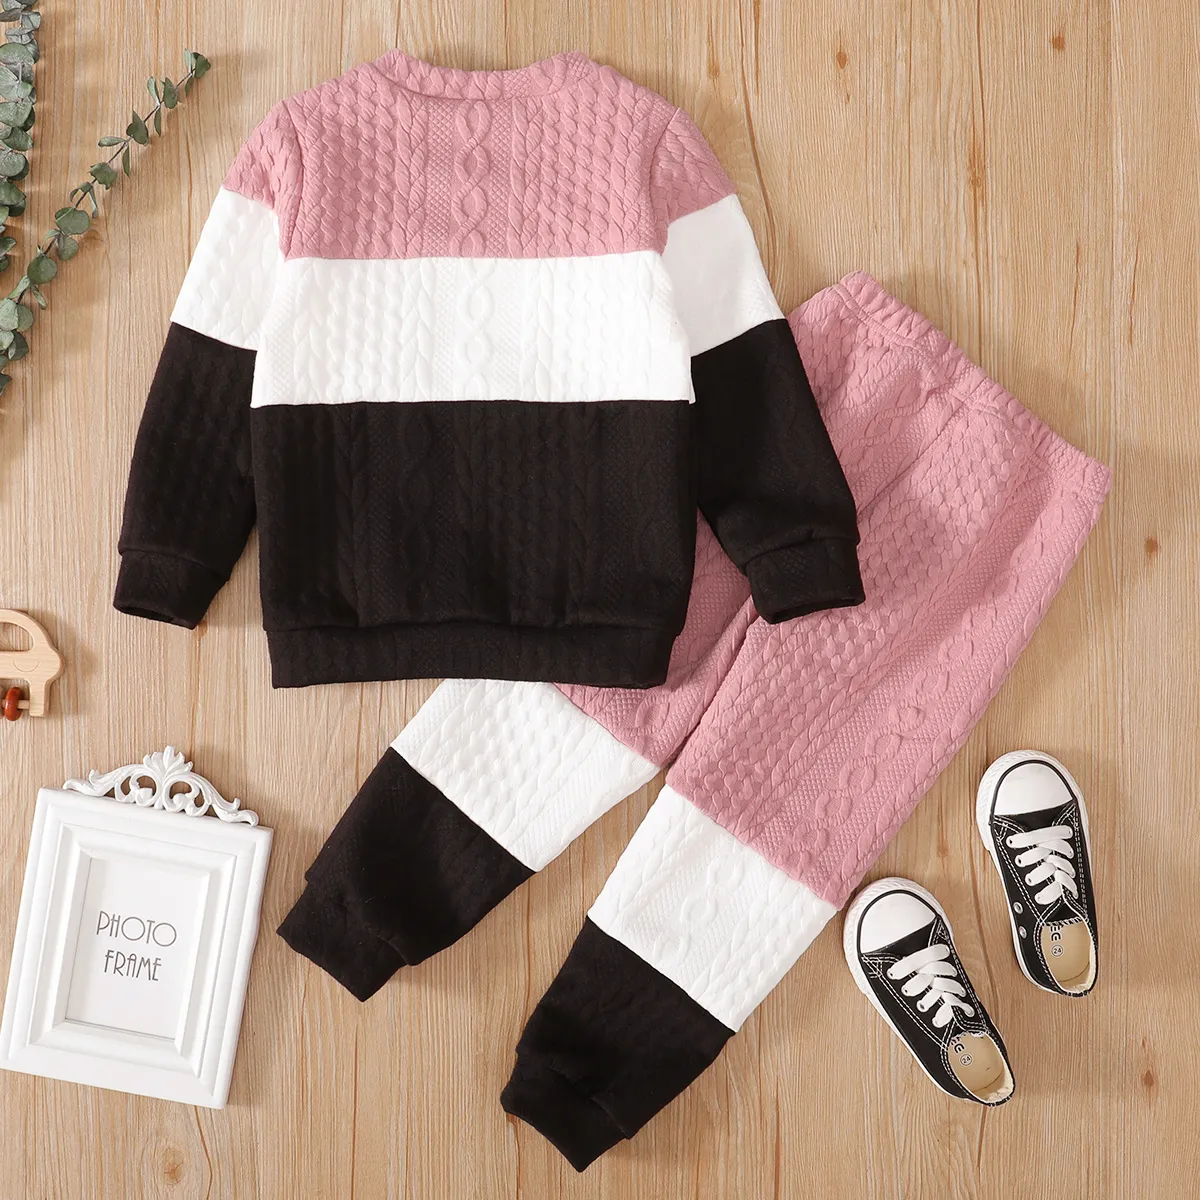 2-piece Toddler Girl/Boy Colorblock Cable Knit Sweatshirt and Pants Set Pink big image 1